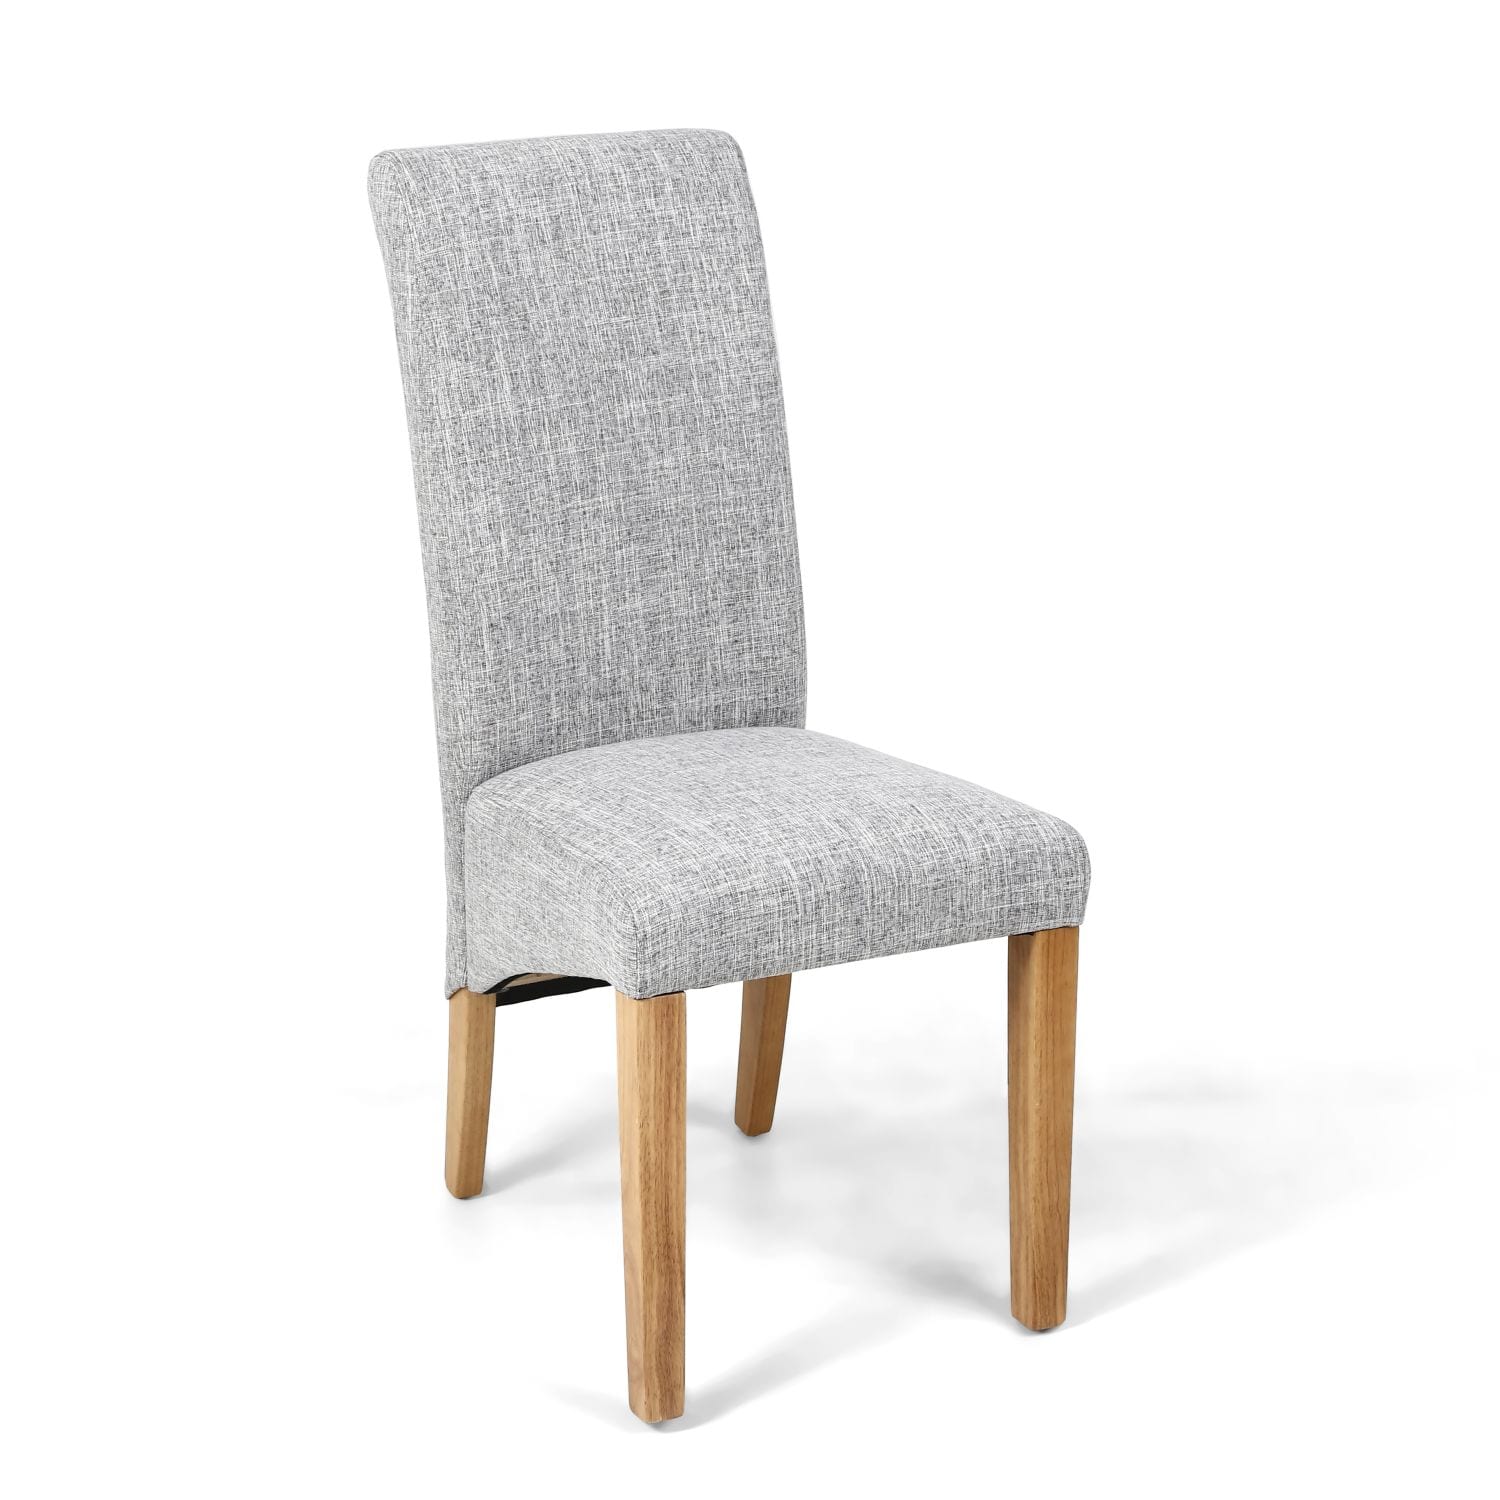 Karma Scroll Flax Effect Grey Weave Chair